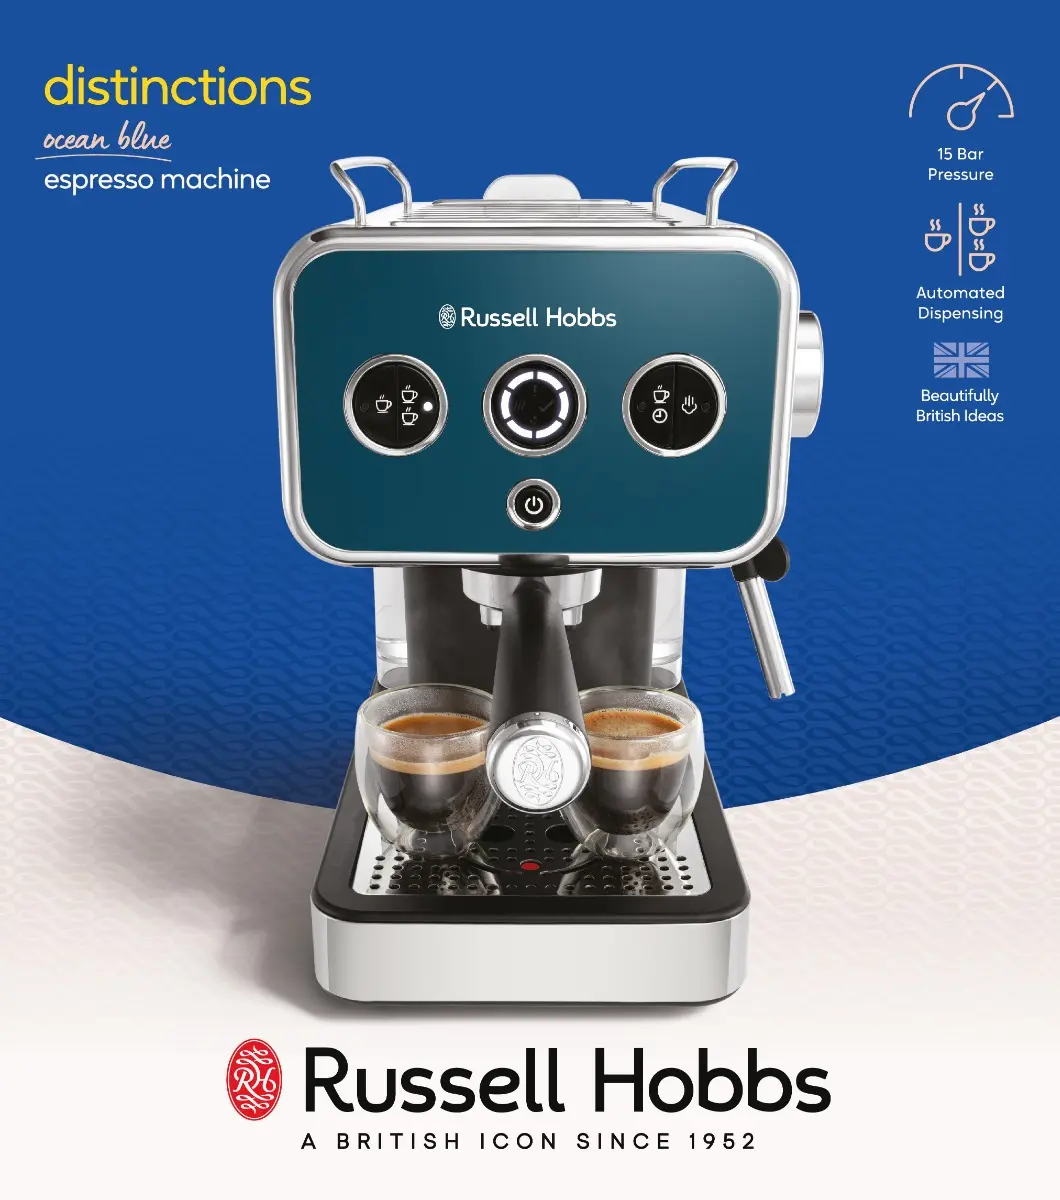 Espressor Russell Hobbs Distinctions Ocean Blue 26451-56, 15 bari, incalzitor Thermoblock, automat/manual, Inox/ Albastru